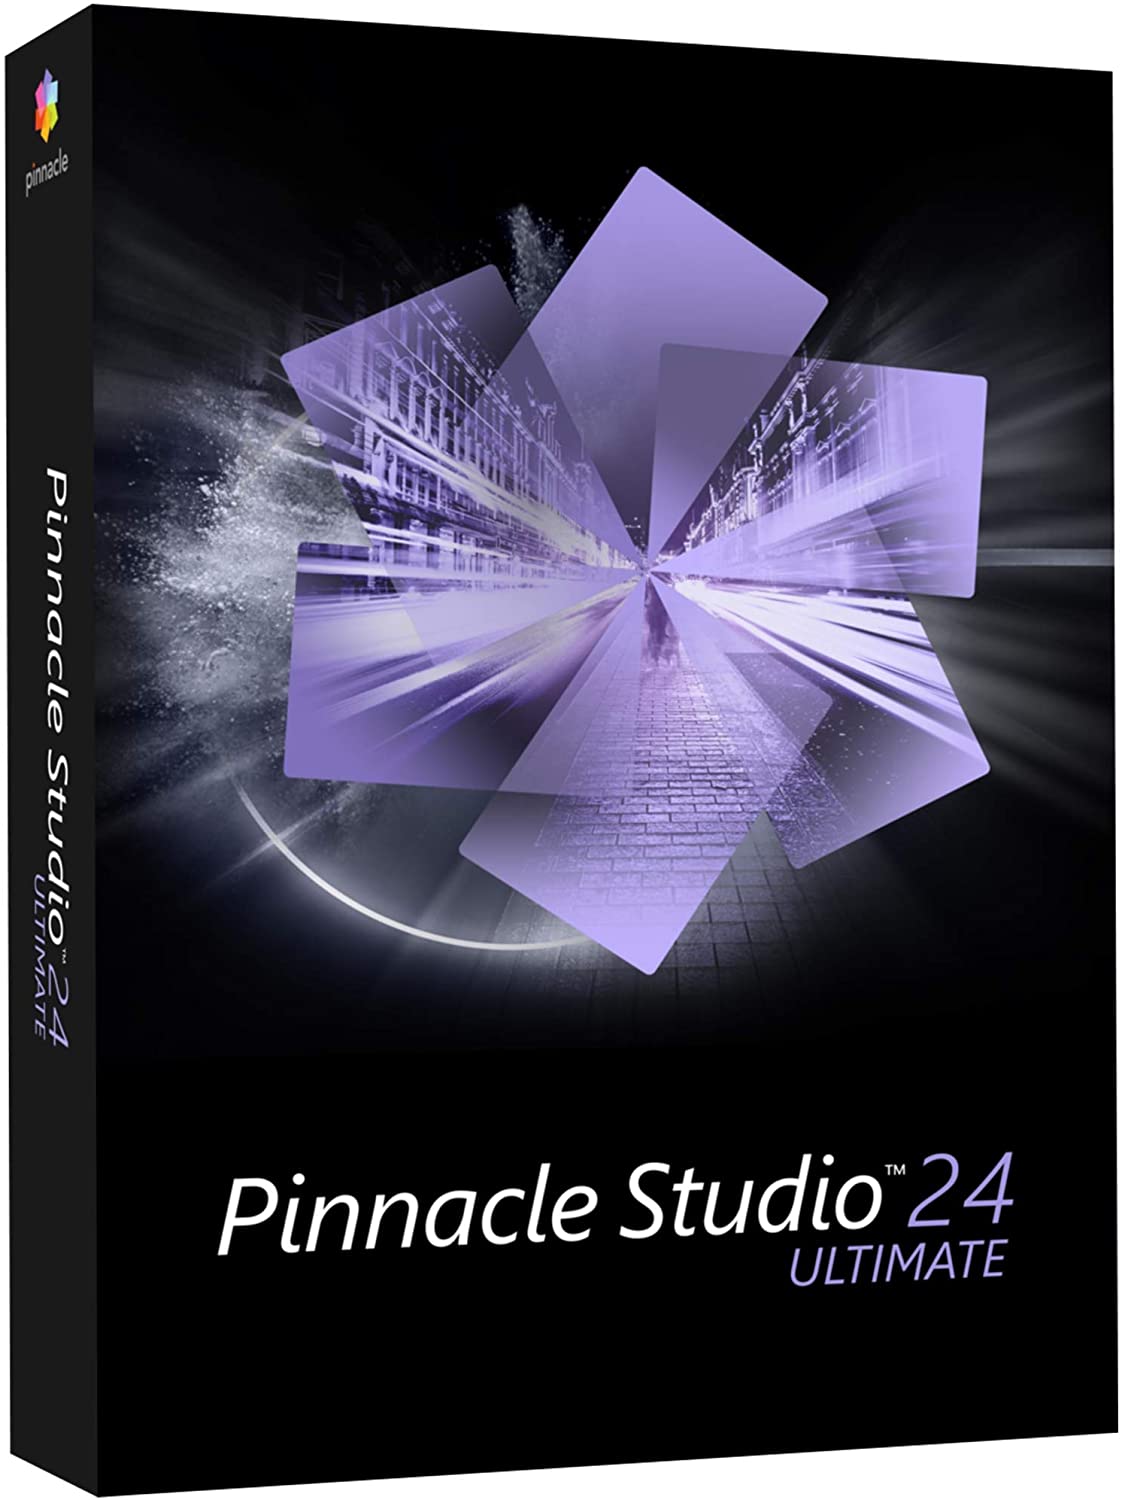 Pinnacle Studio Ultimate Crack + Serial Number Full Version [Latest]